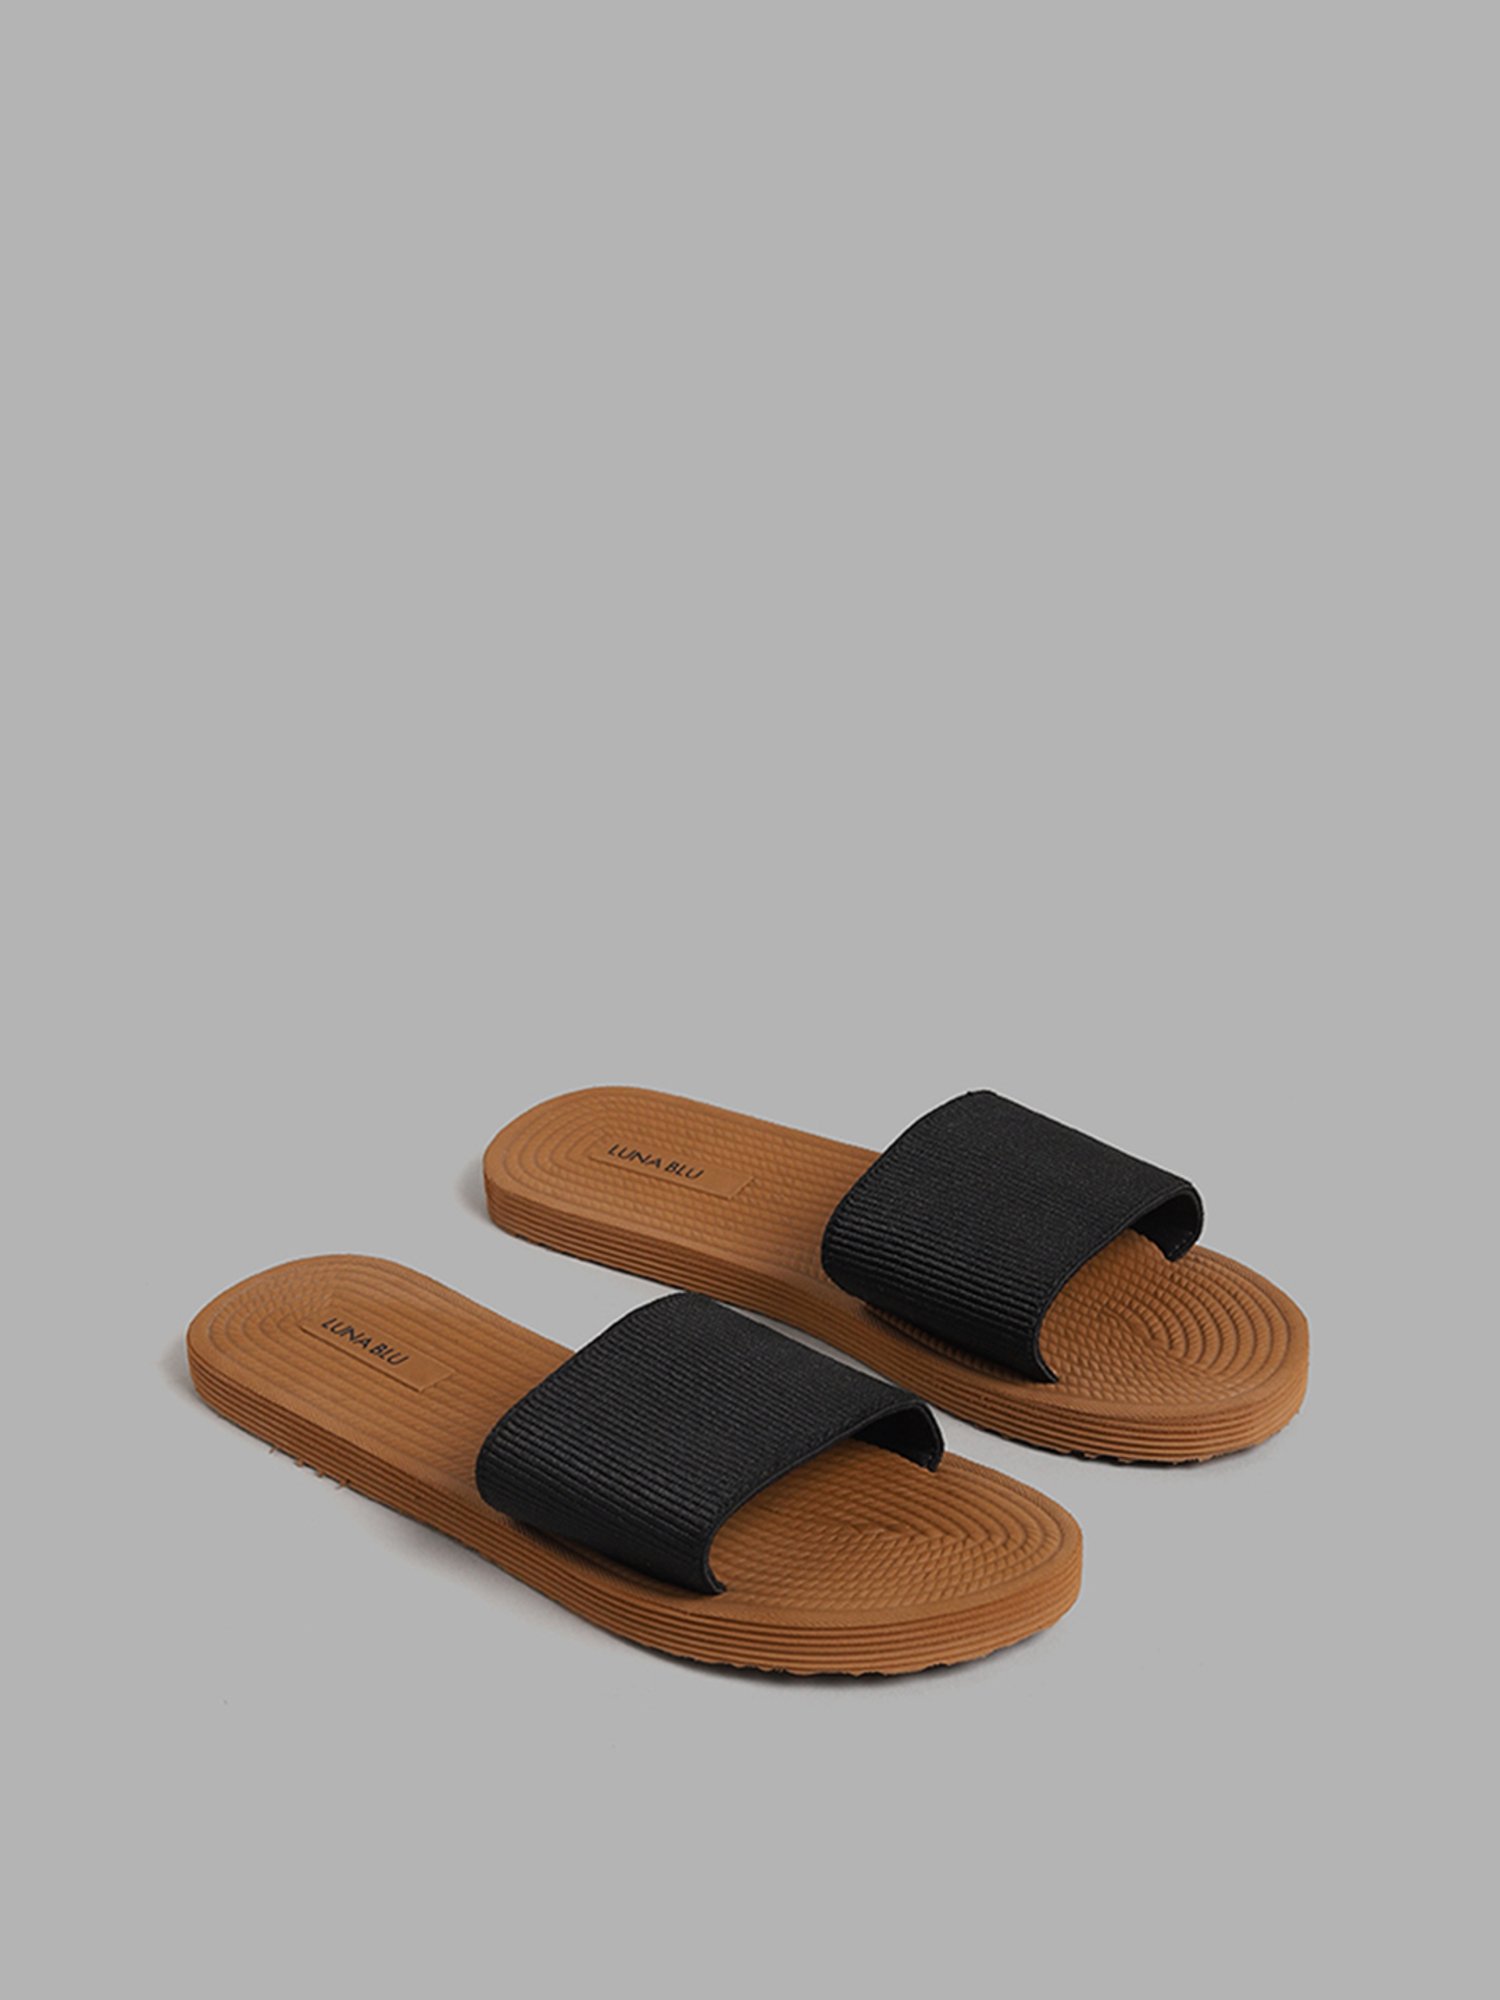 Marina Luna Soft Blue Sandals Size 10 | eBay